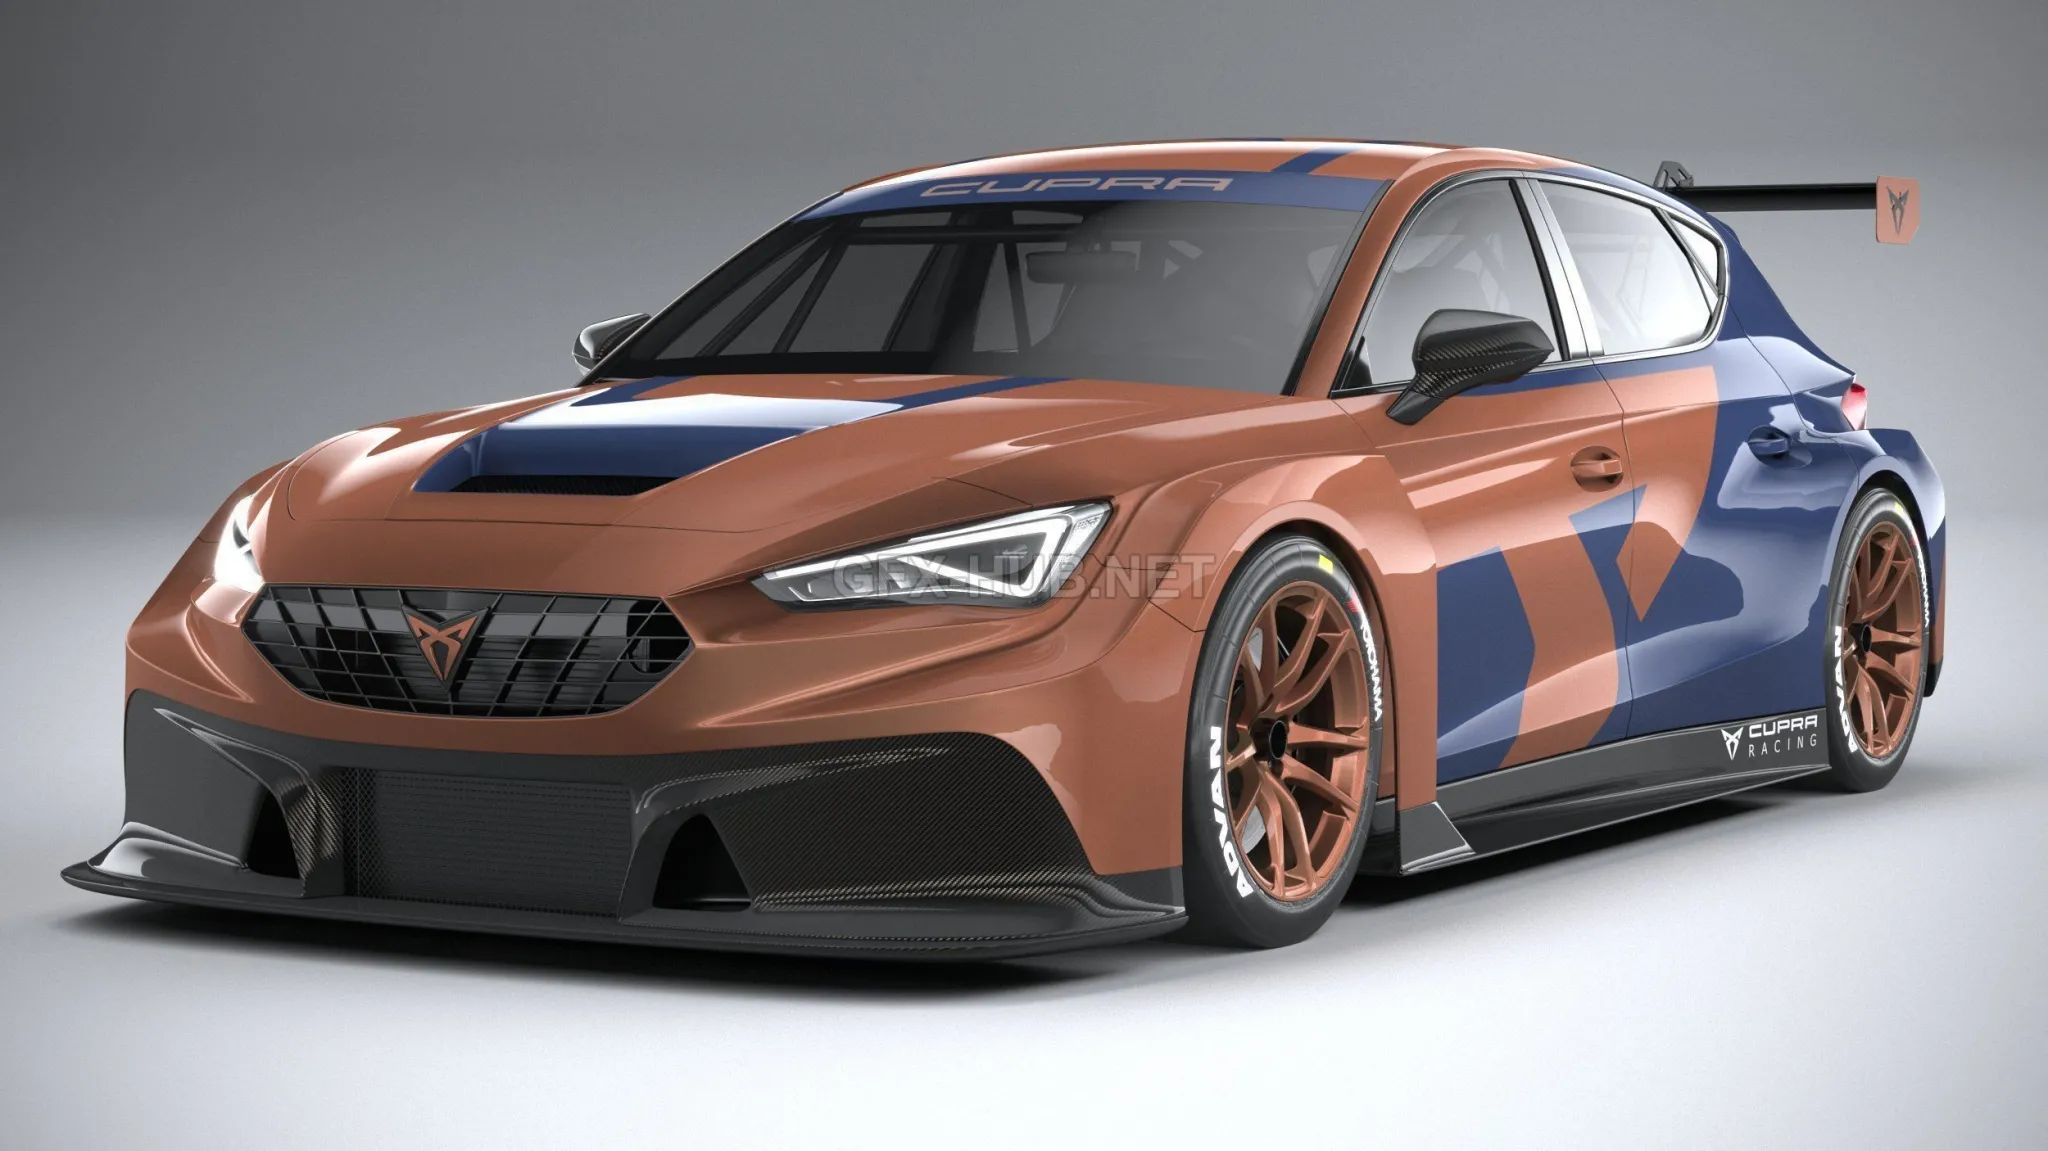 CAR – Seat Leon Cupra Competicion 2020 car 3D Model